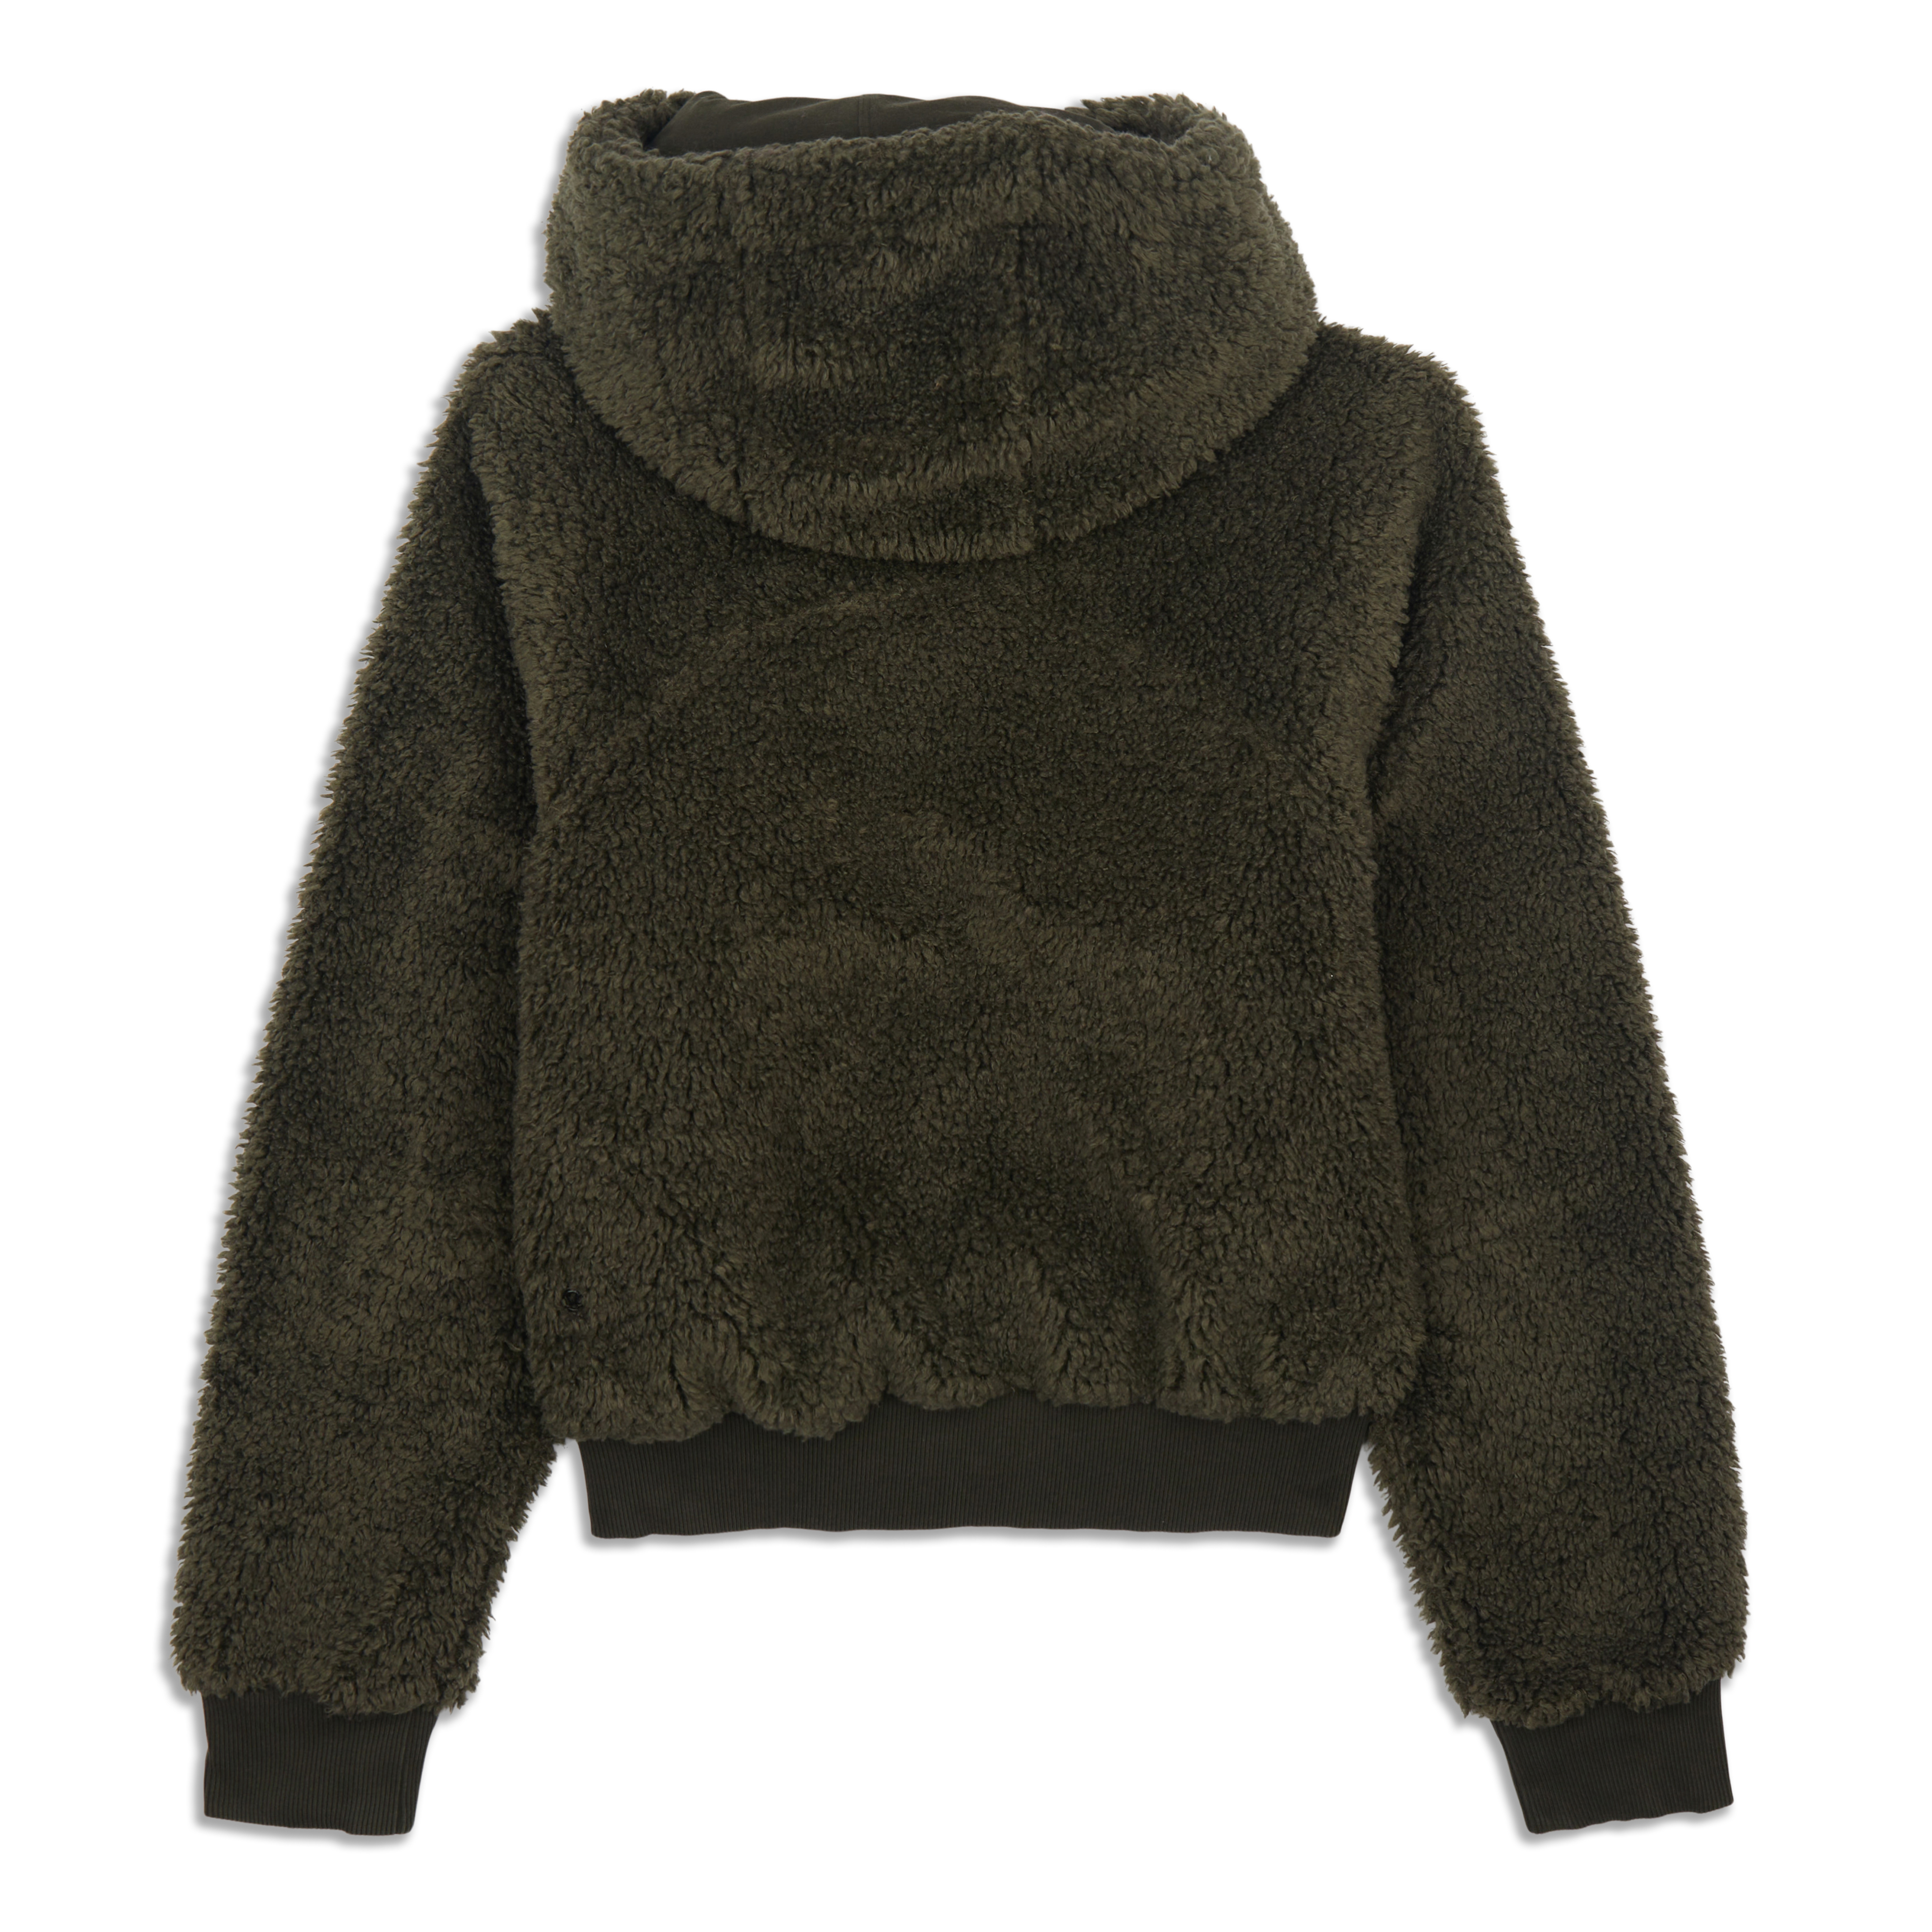 NWOT lululemon textured fleece half zipper hoodie size 12 white